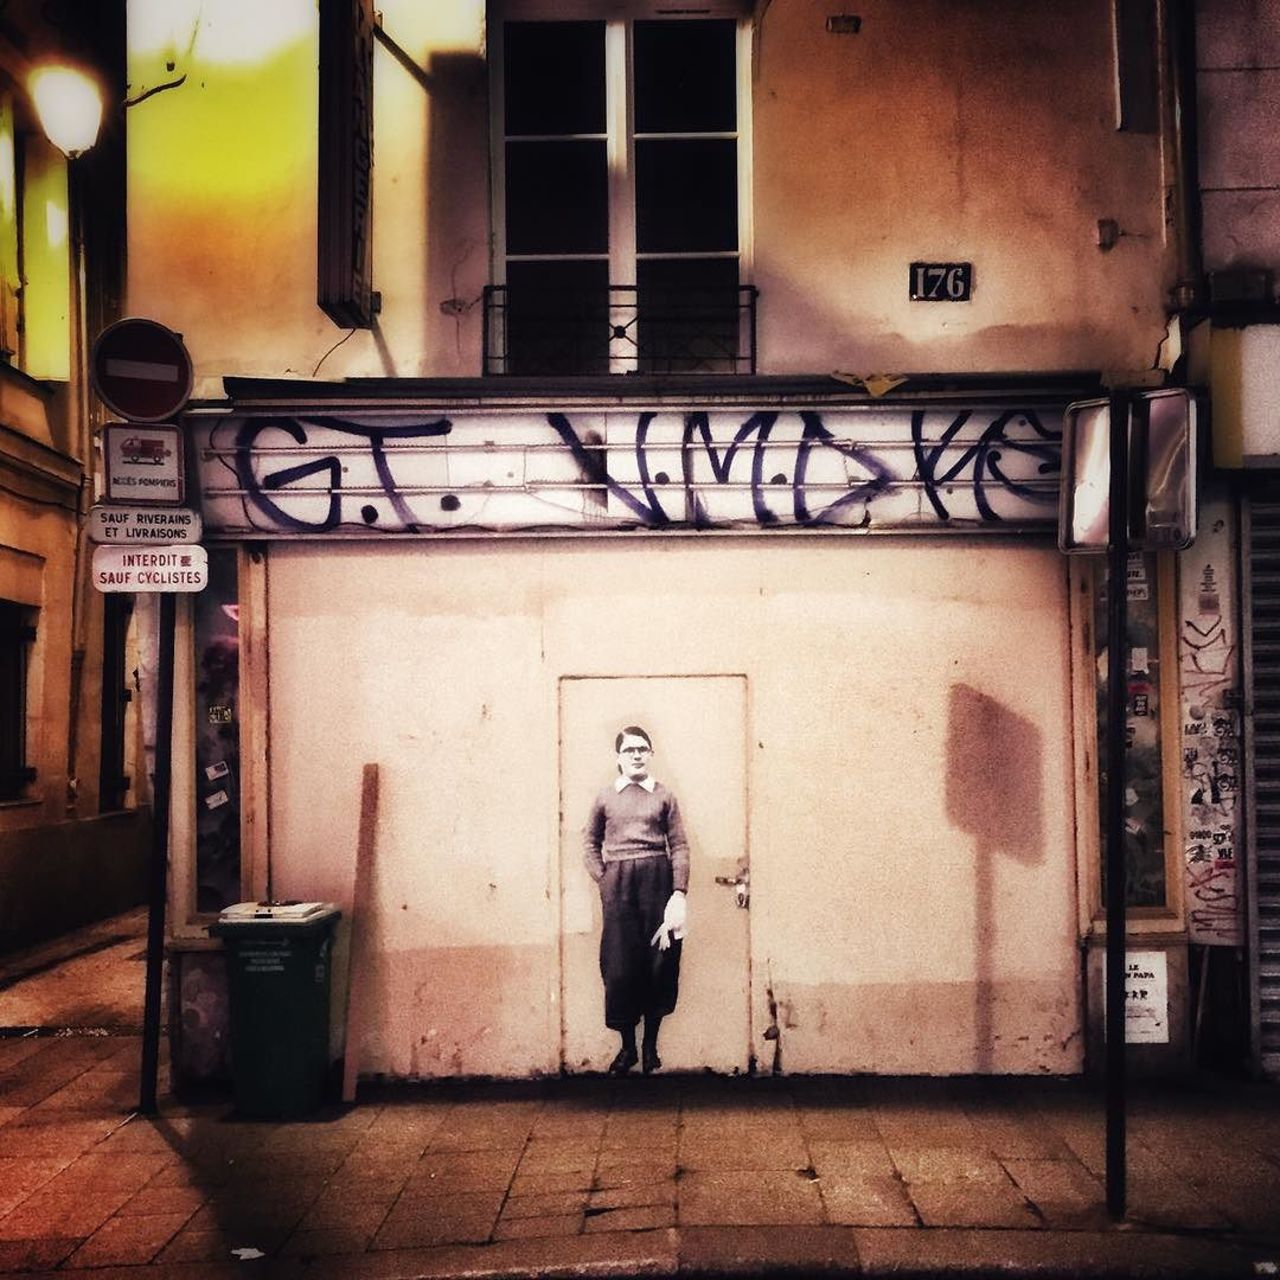 RT @circumjacent_fr: #Paris #graffiti photo by @hugdubois http://ift.tt/1i7rIHS #StreetArt https://t.co/6gA0olEmq0